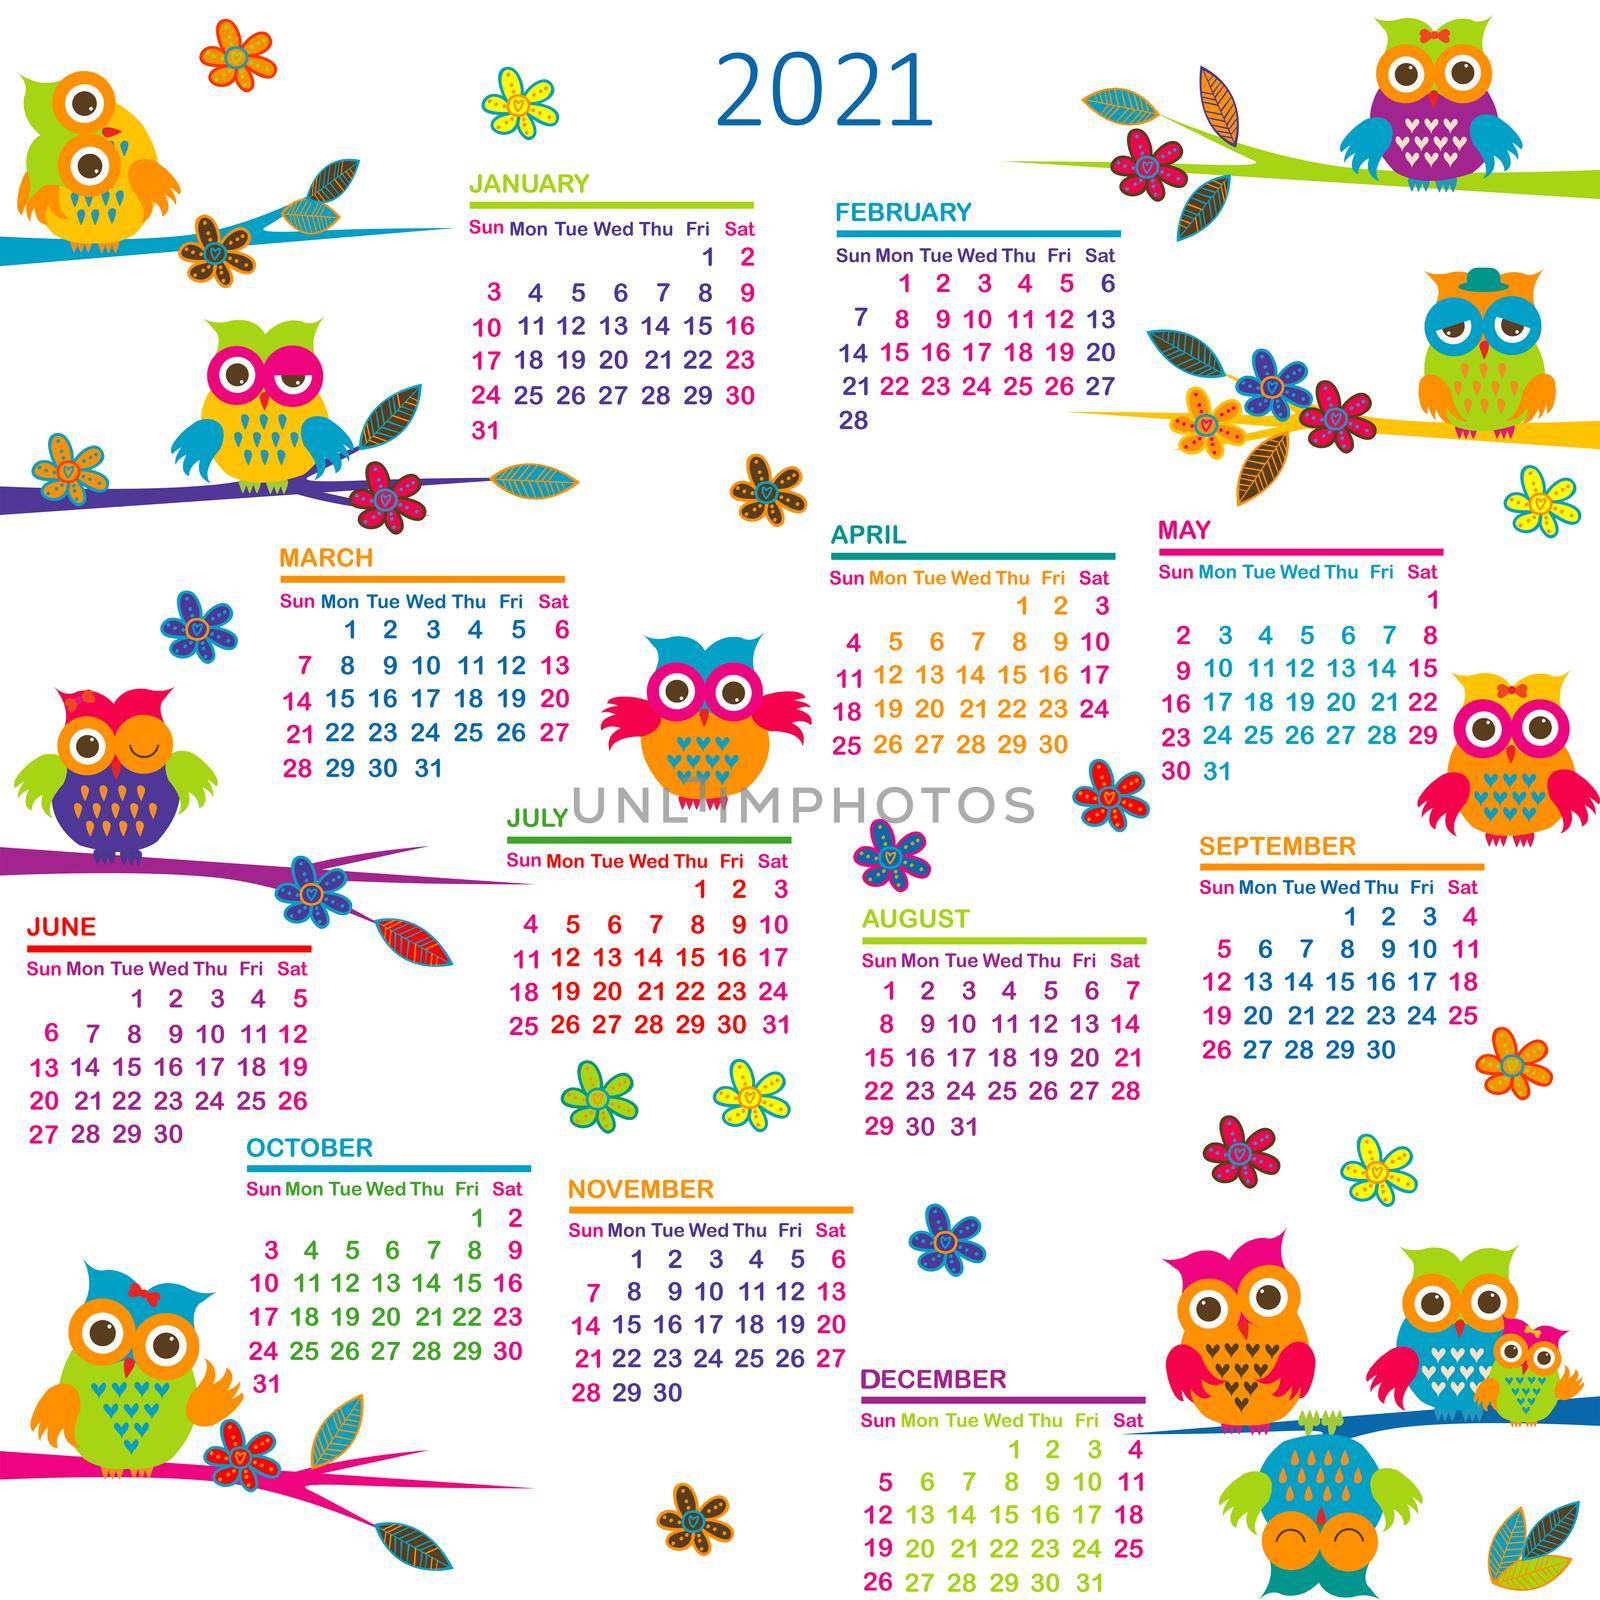 2021 Calendar with cartoon owls by hibrida13